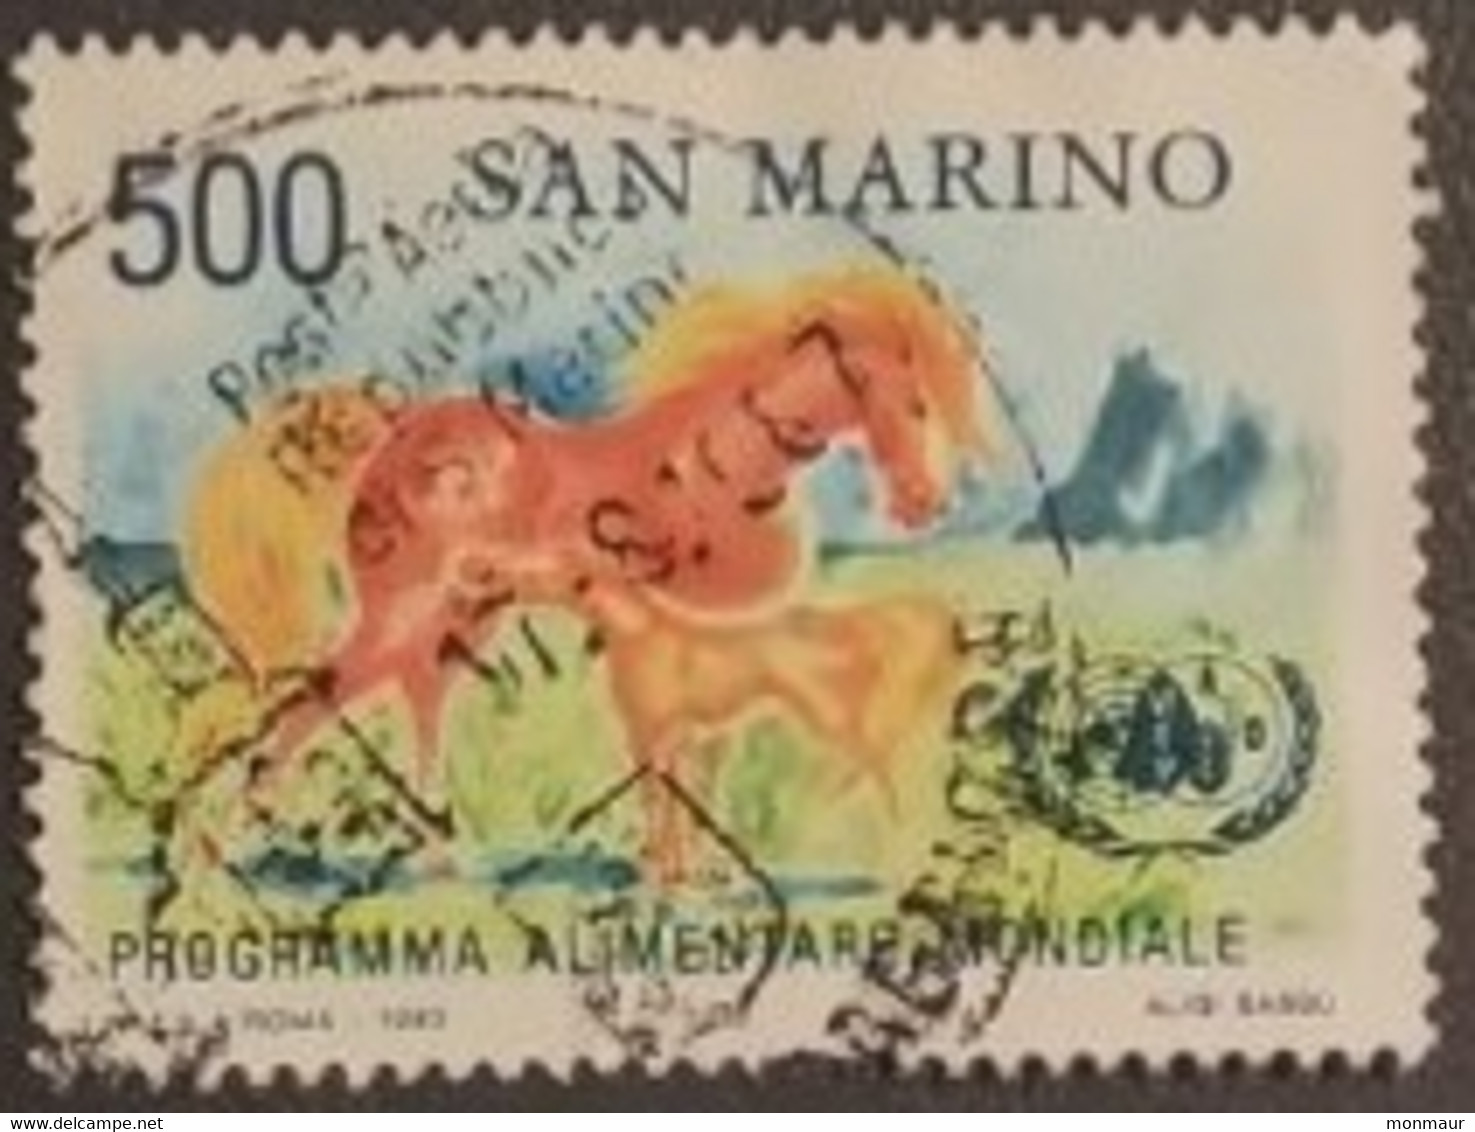 SAN MARINO 1983 PROGRAMMA ALIMENTARE MONDIALE - Used Stamps